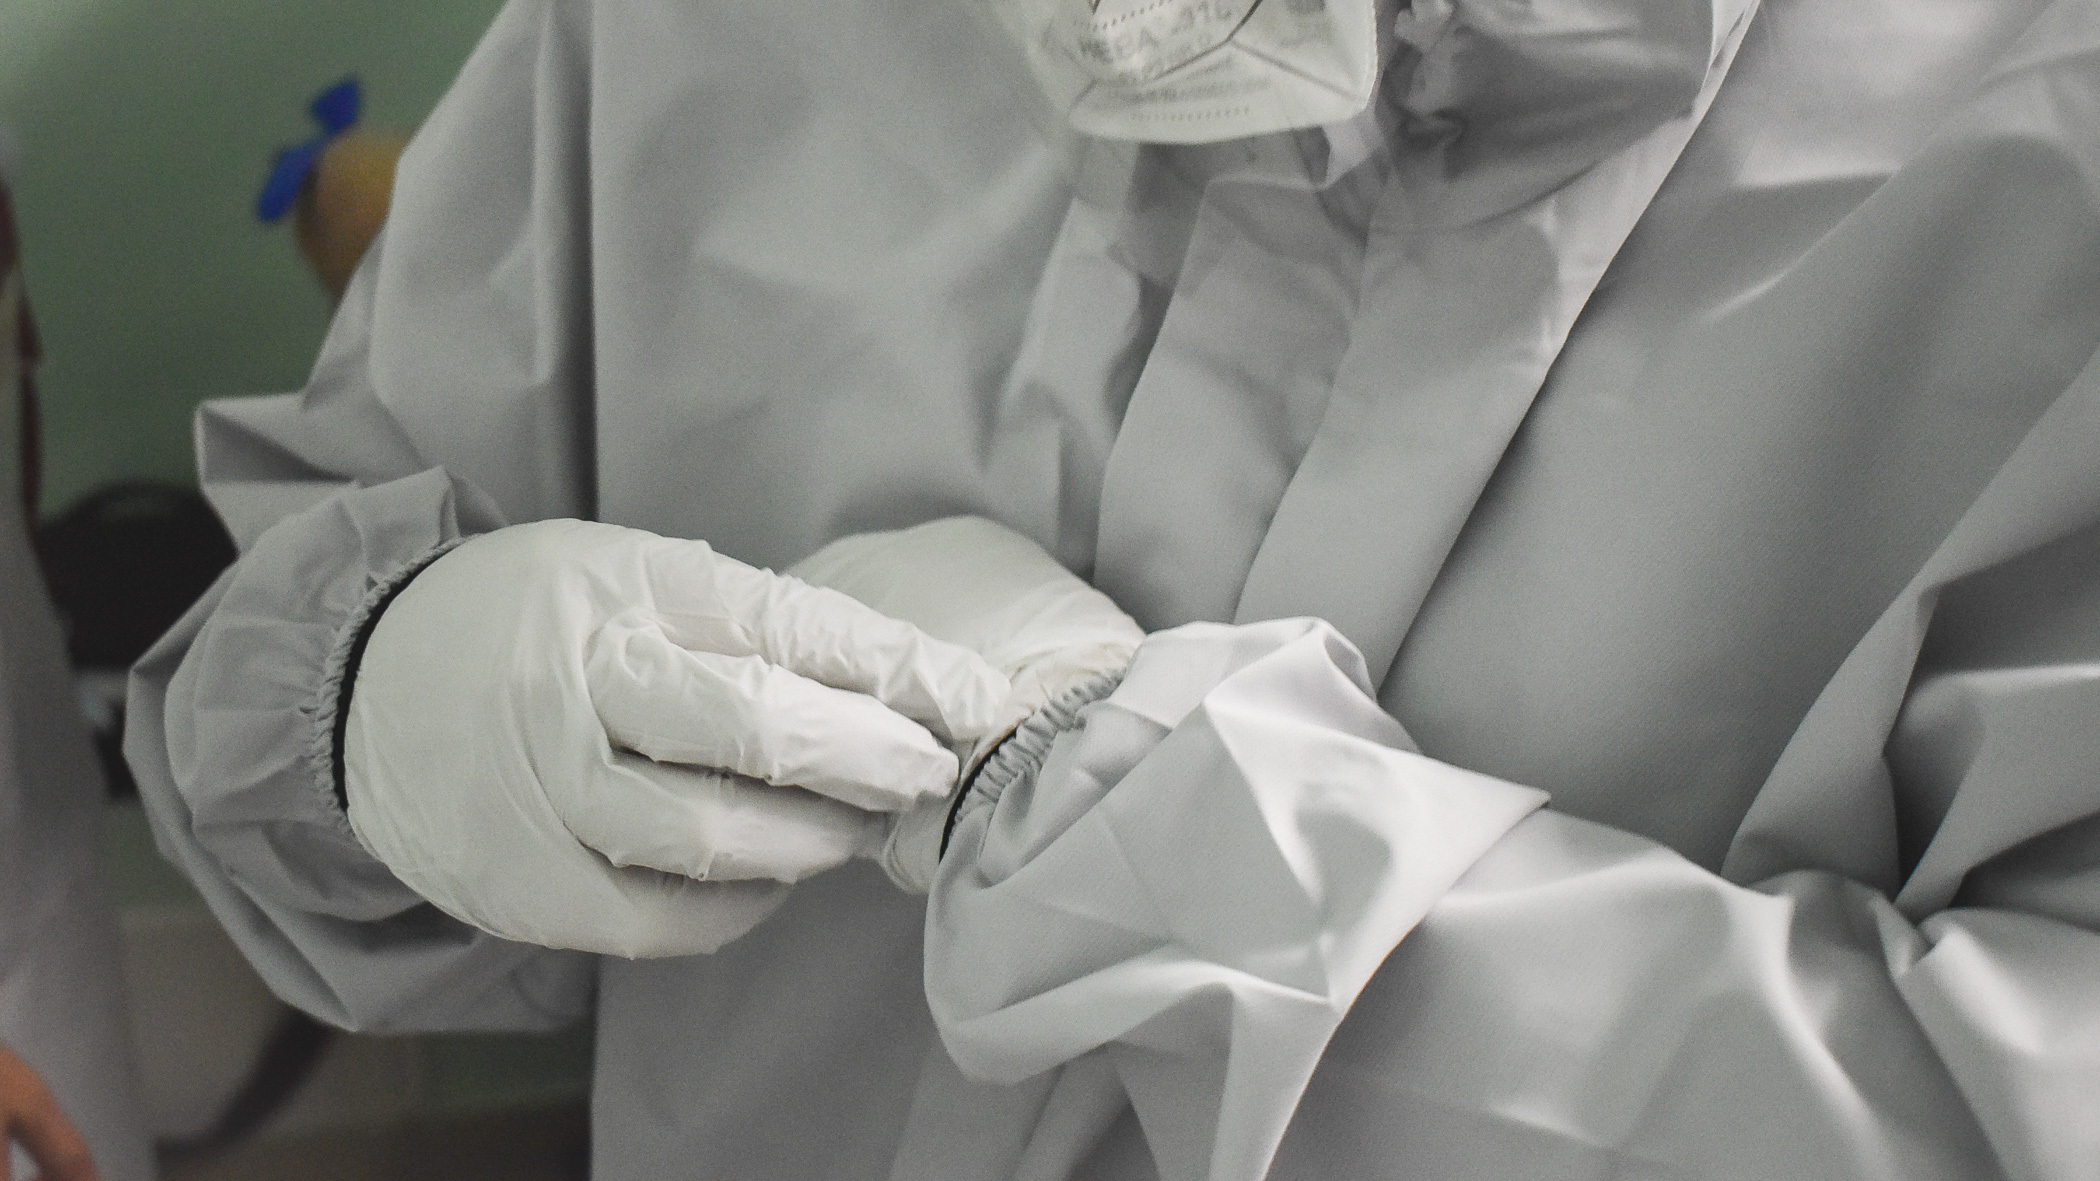 В ХМАО 78 человек заболело коронавирусом за сутки, один человек умер